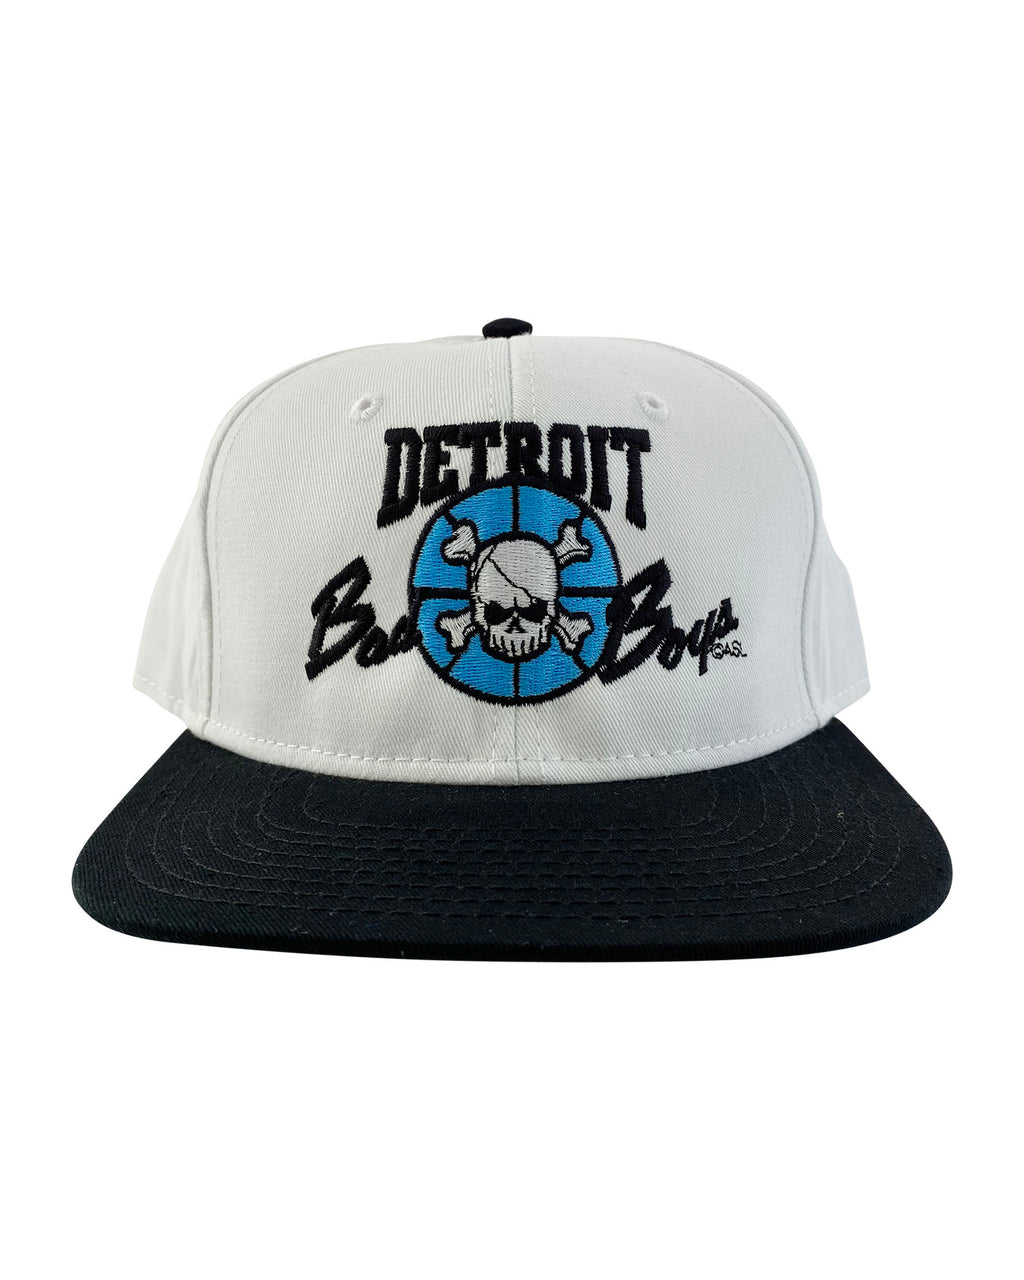 Authentic Detroit Bad Boys White Snapback Hat